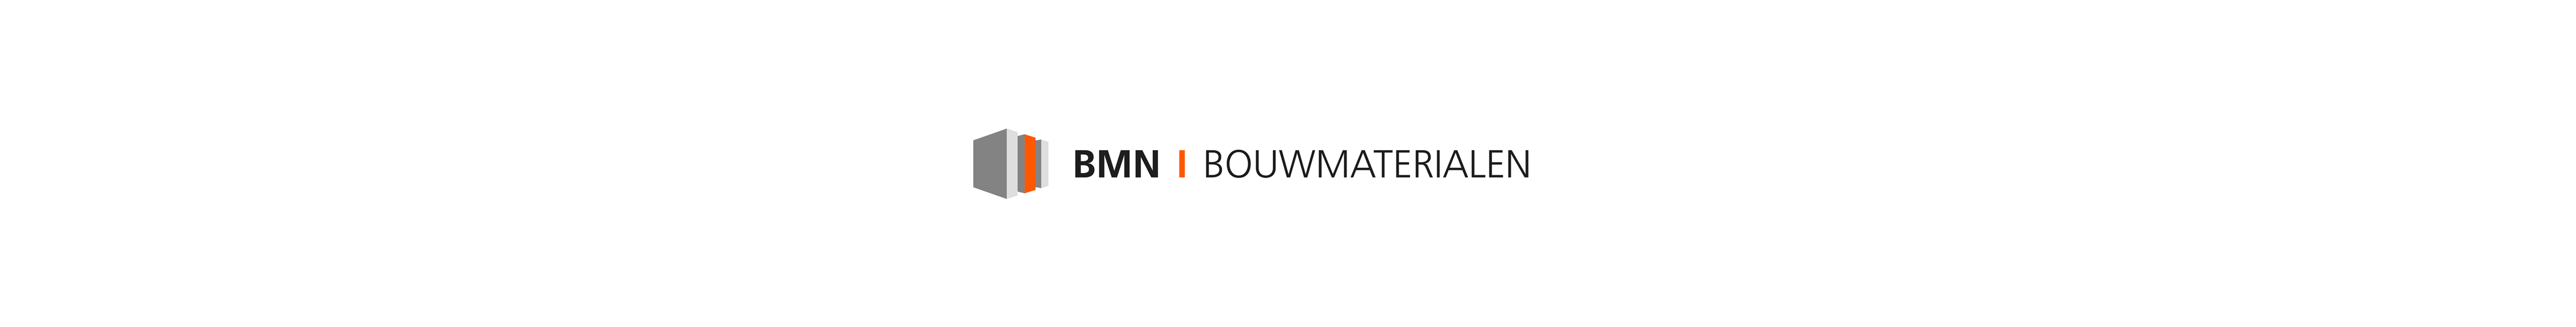 Logo - BMN I Bouwmaterialen - liggend - zwart - web RGB - JPEG - Rev_2021_10